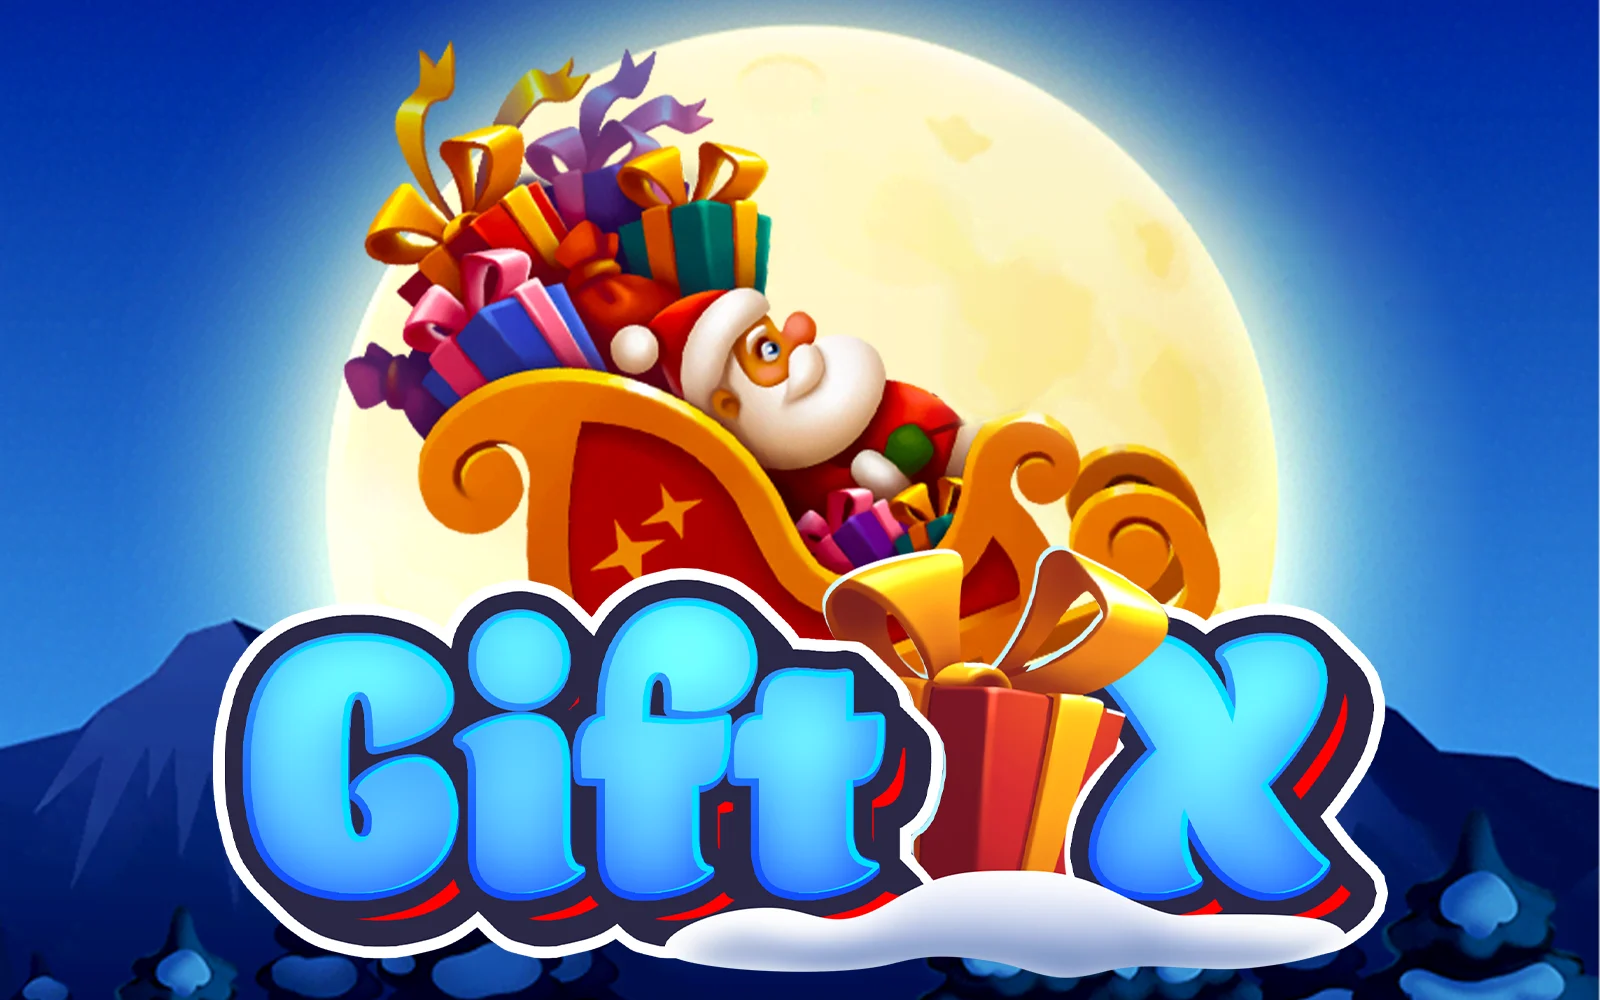 Joacă Gift X în cazinoul online Starcasino.be